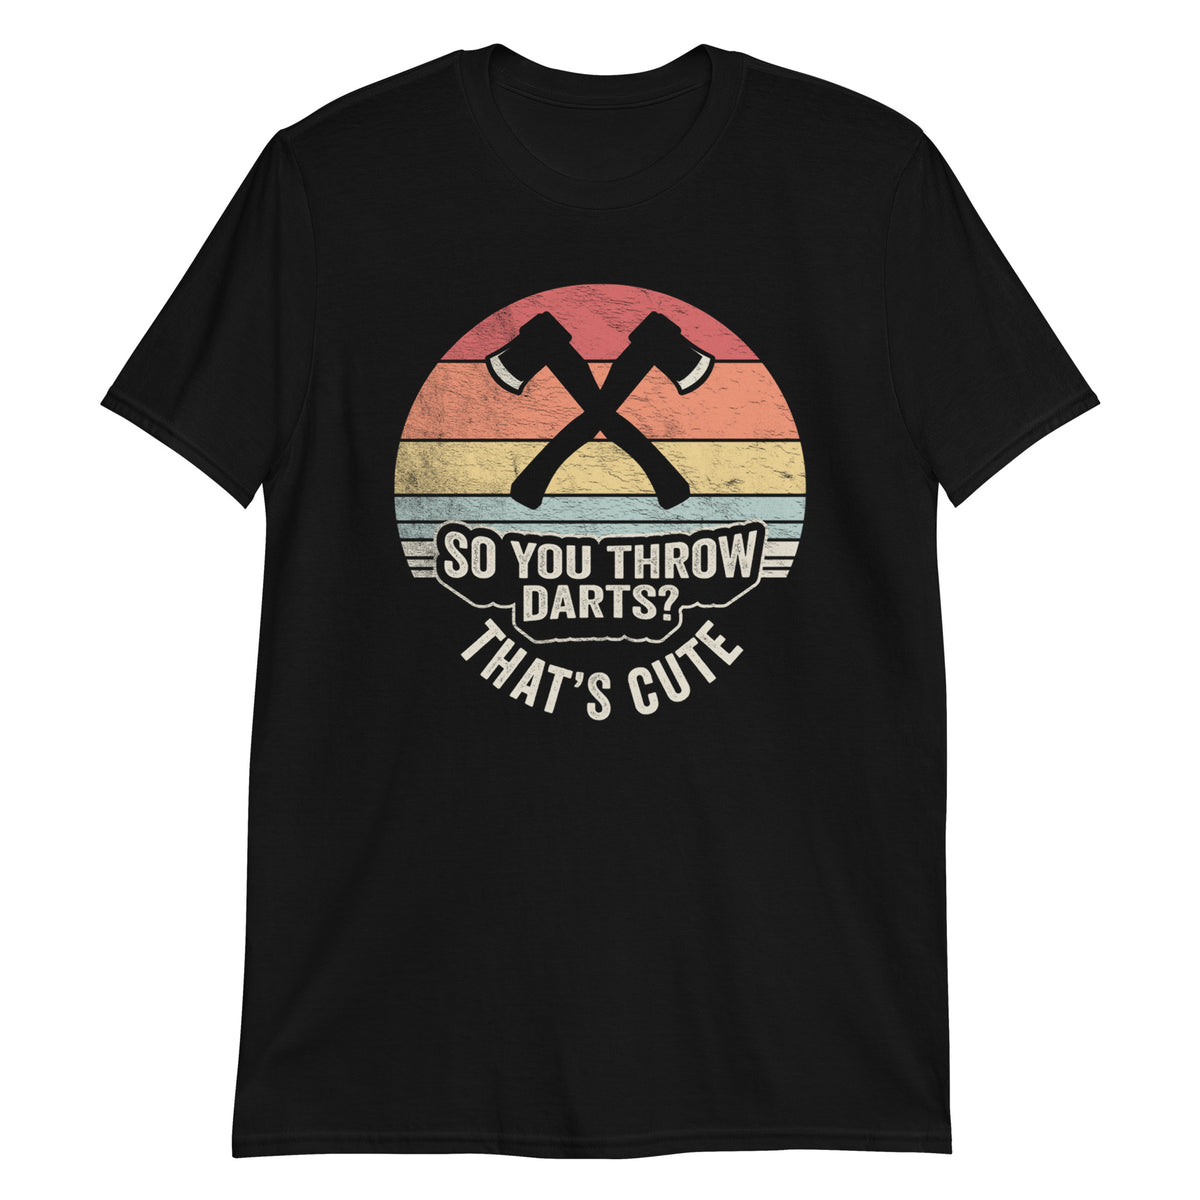 So You Throw Darts? T-Shirt